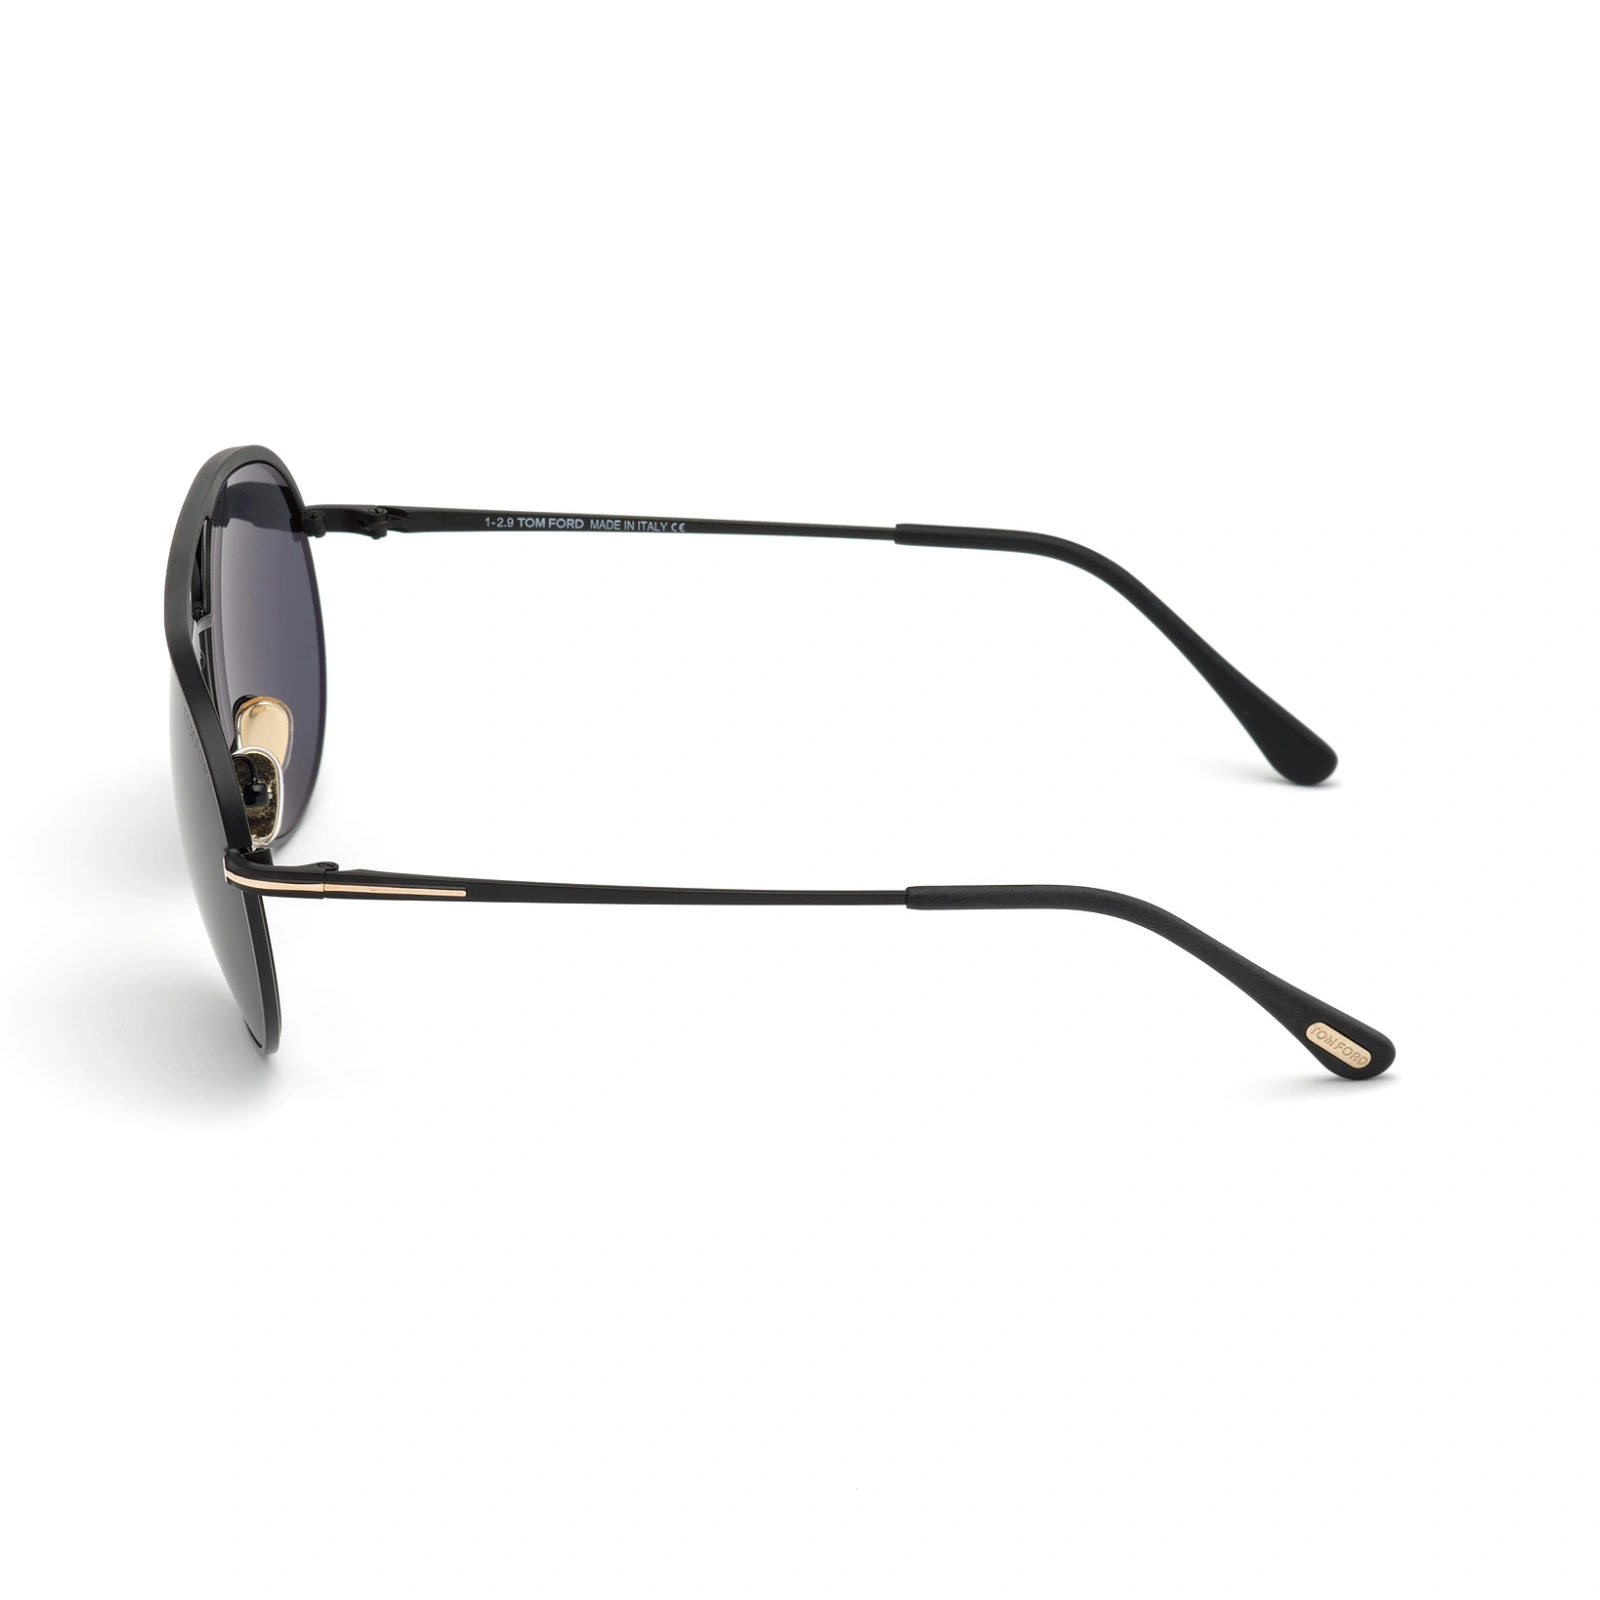 Tom Ford Sunglasses Tom Ford Sunglasses FT0772 02A 61mm Gio Eyeglasses Eyewear UK USA Australia 